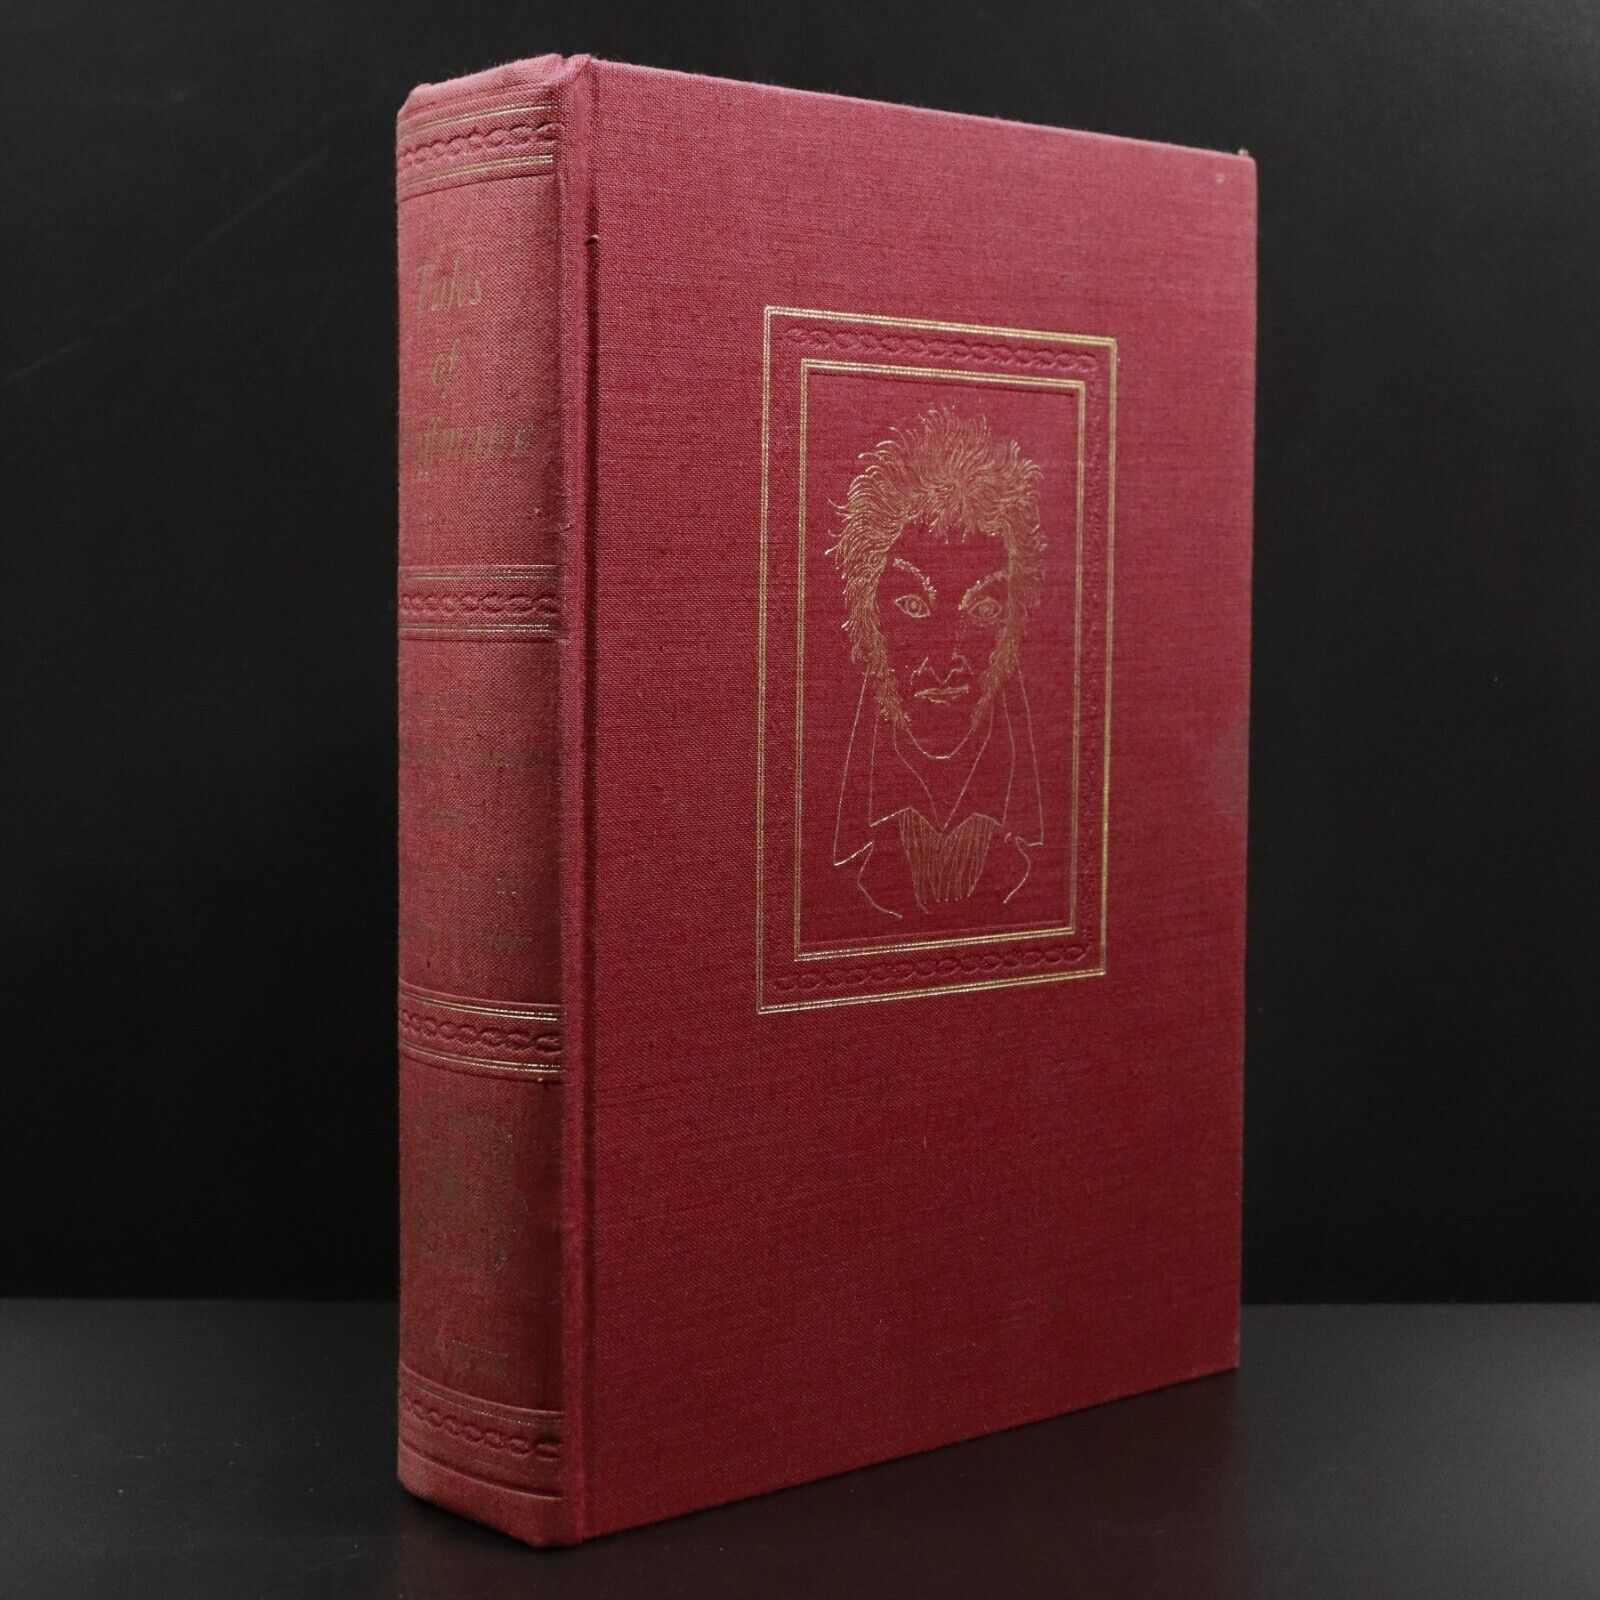 1946 Tales Of Hoffmann Antique German Romantic Literature Book Illustrated